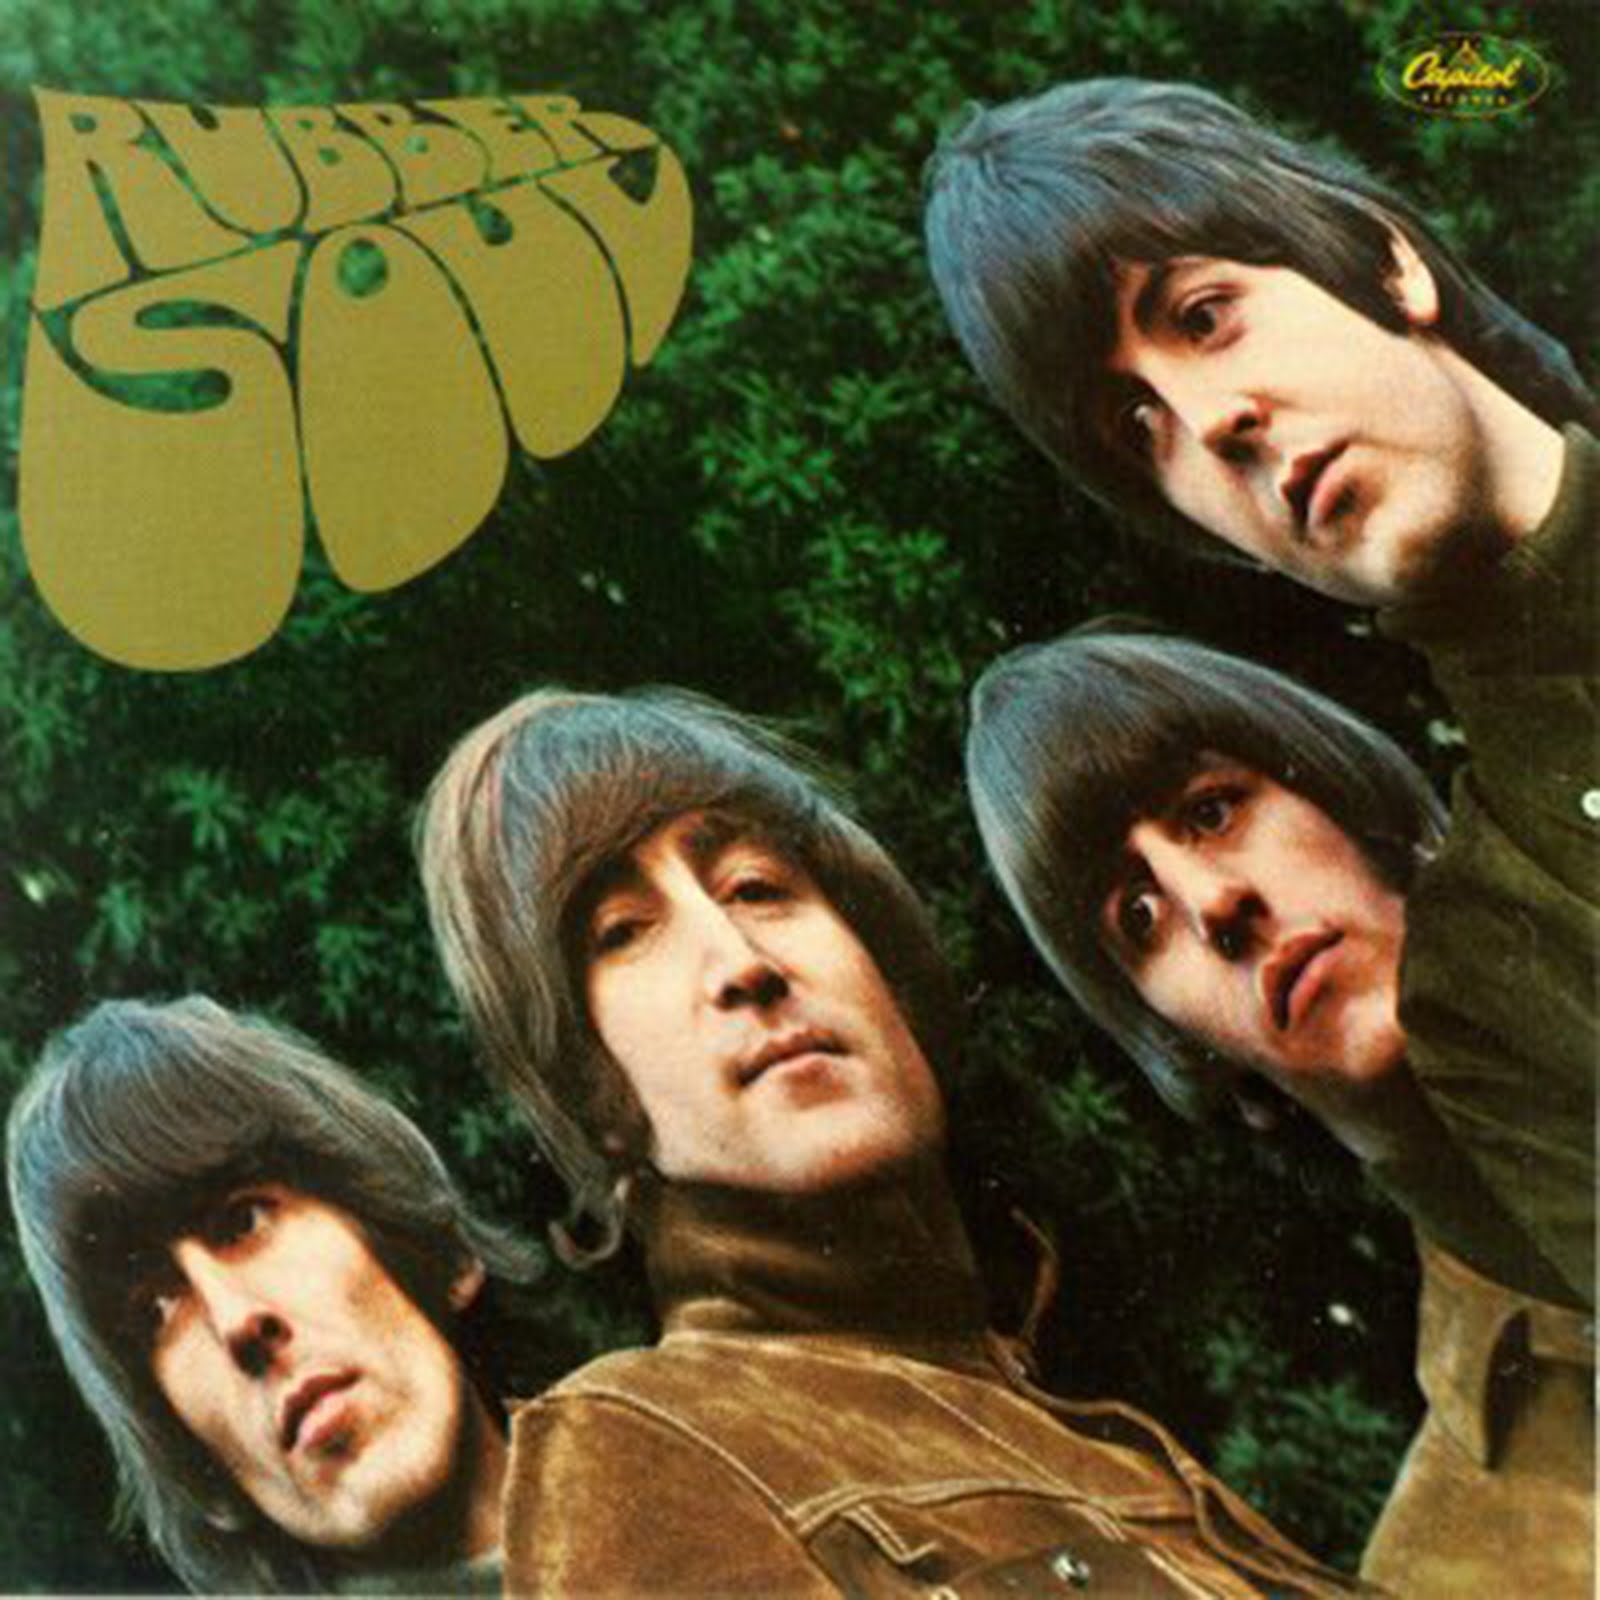 Beatles+-+Rubber+Soul+1966+FRONT.jpg